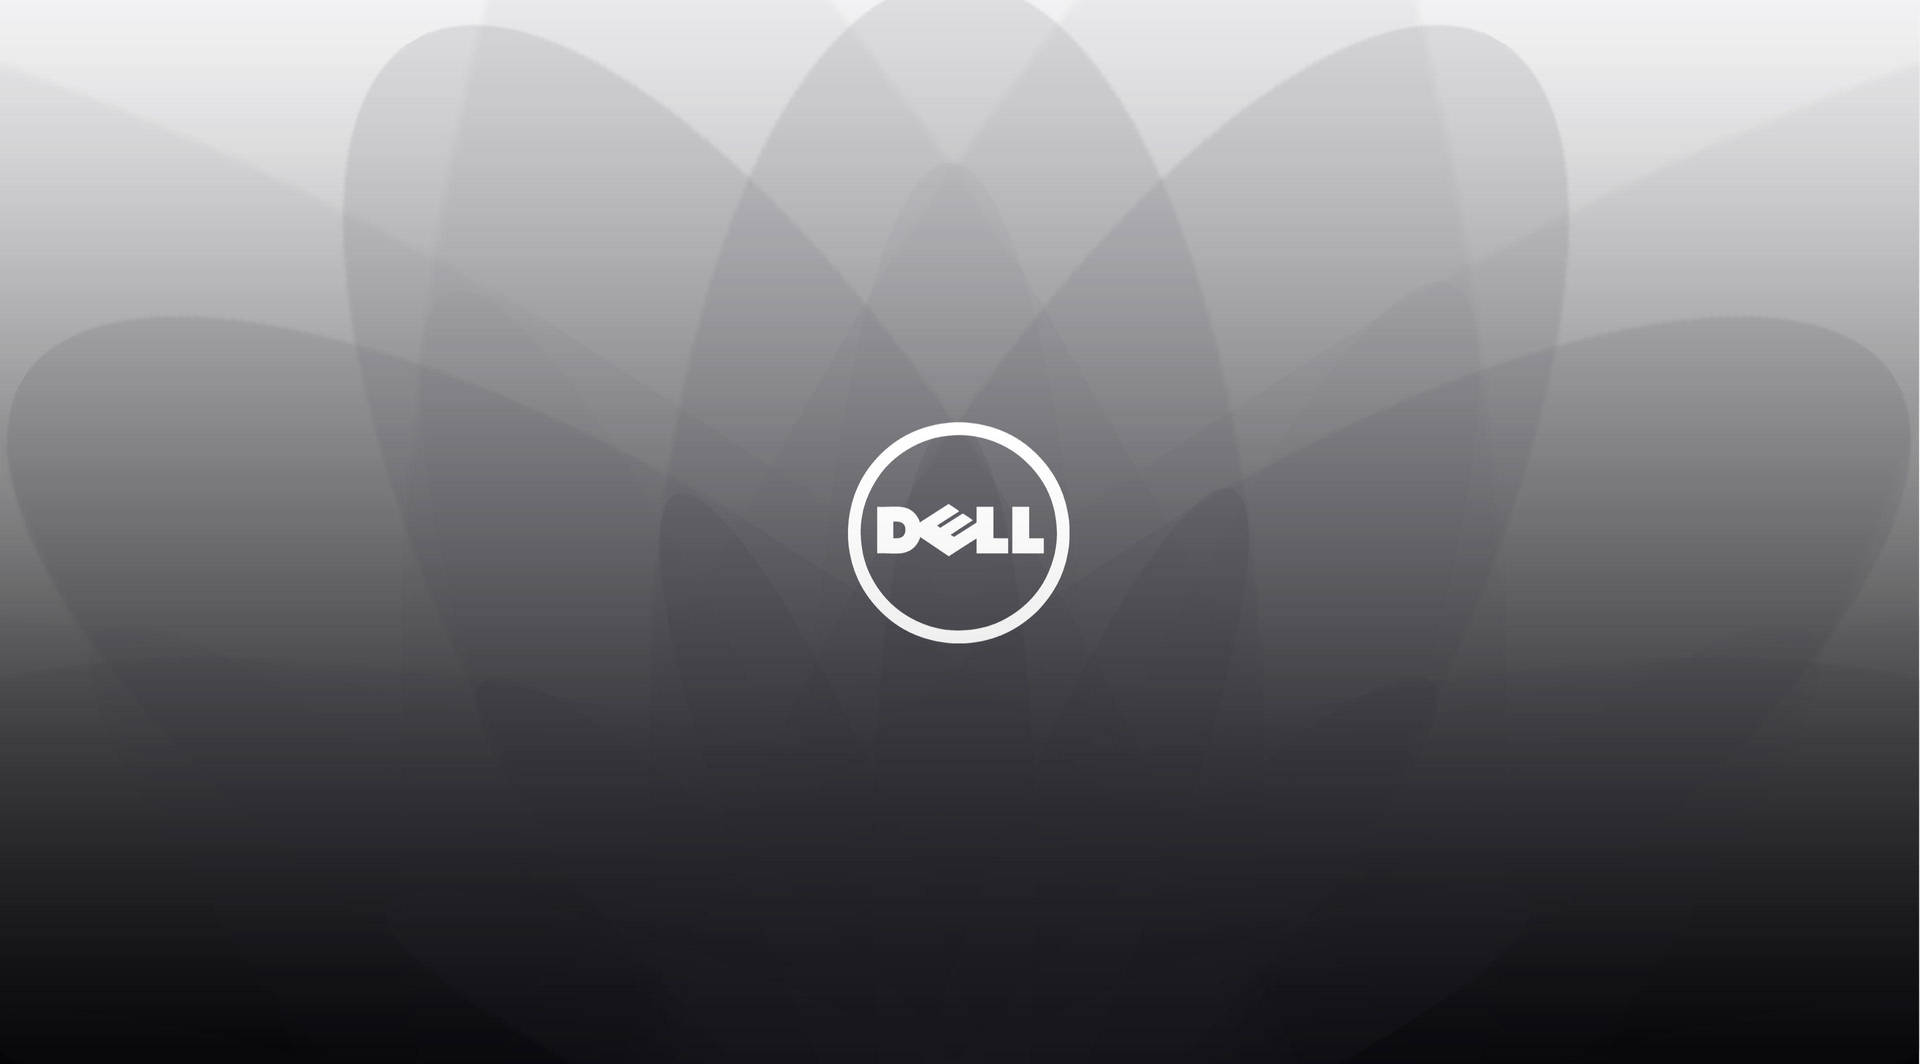 En Dell HD-logo med grå og hvid design. Wallpaper